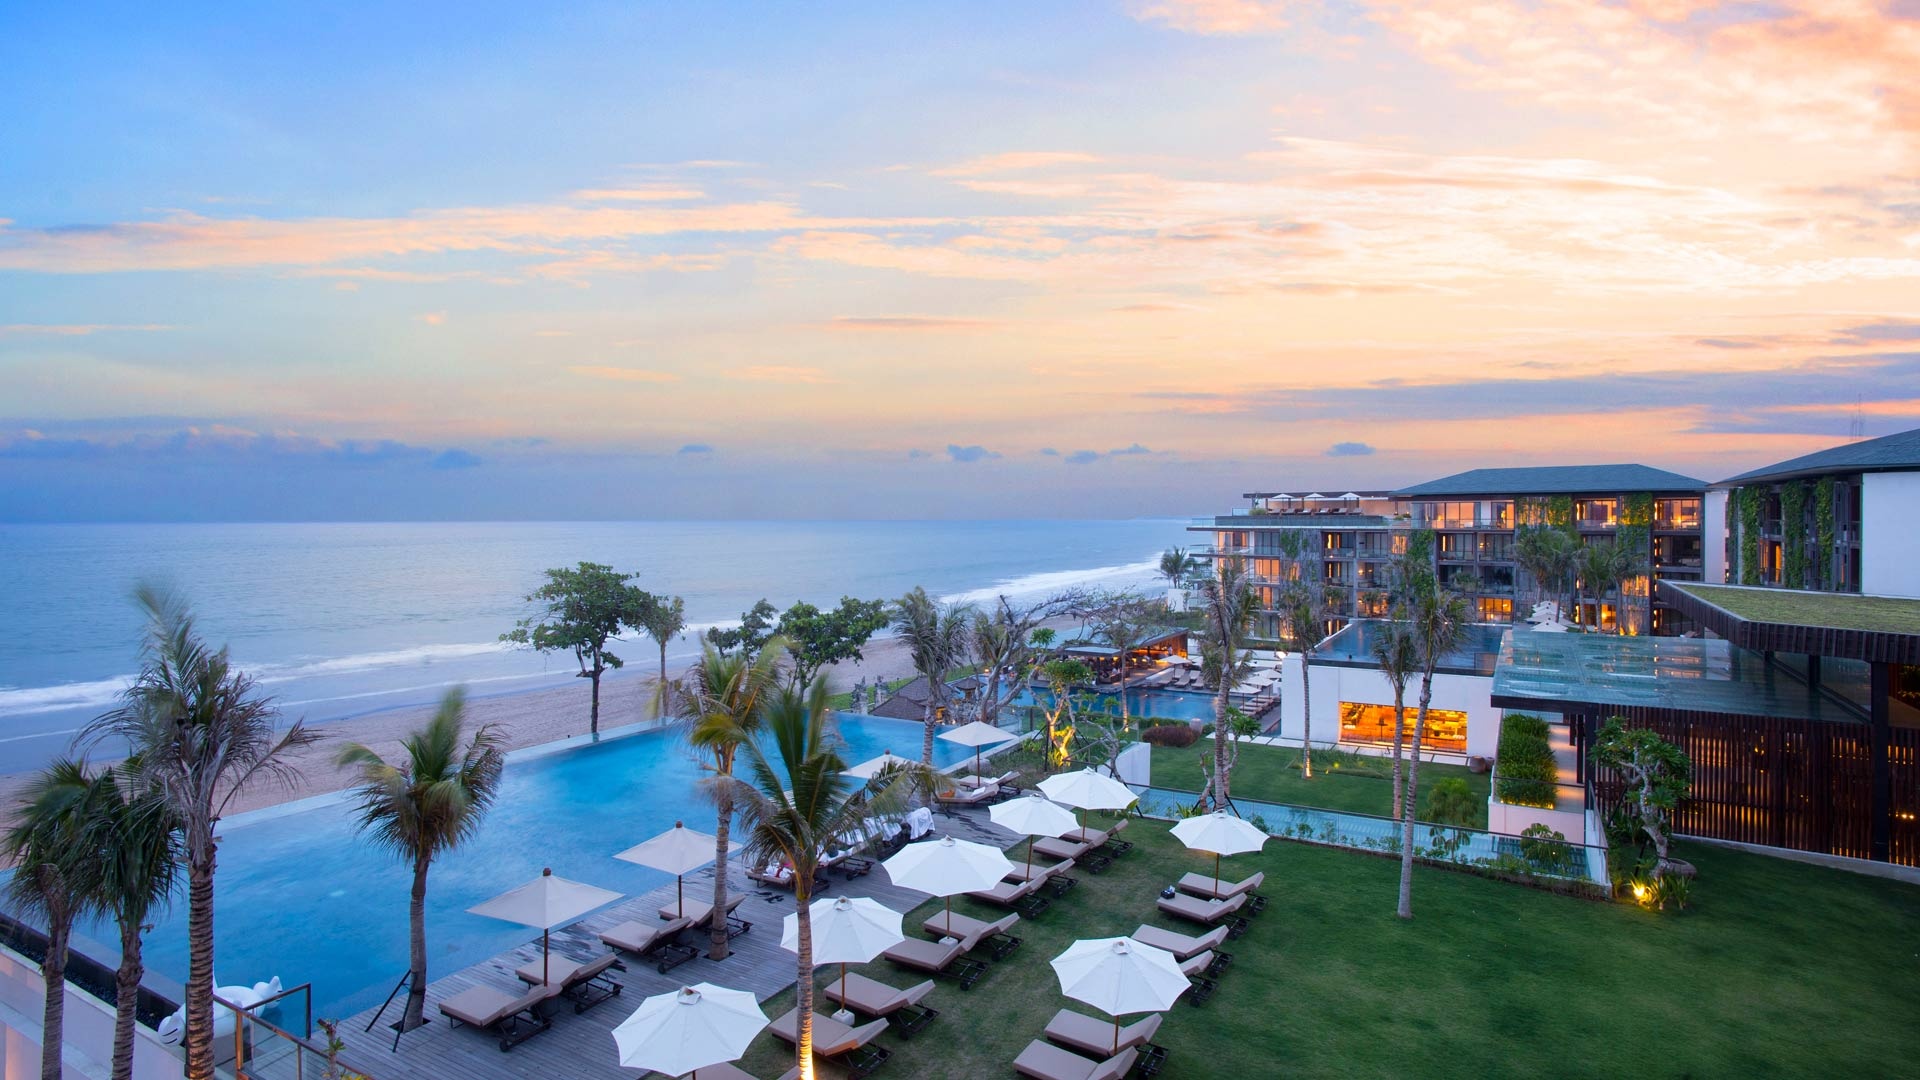 Bali luxury, Beachside retreat, Indulgence personified, Exquisite paradise, 1920x1080 Full HD Desktop